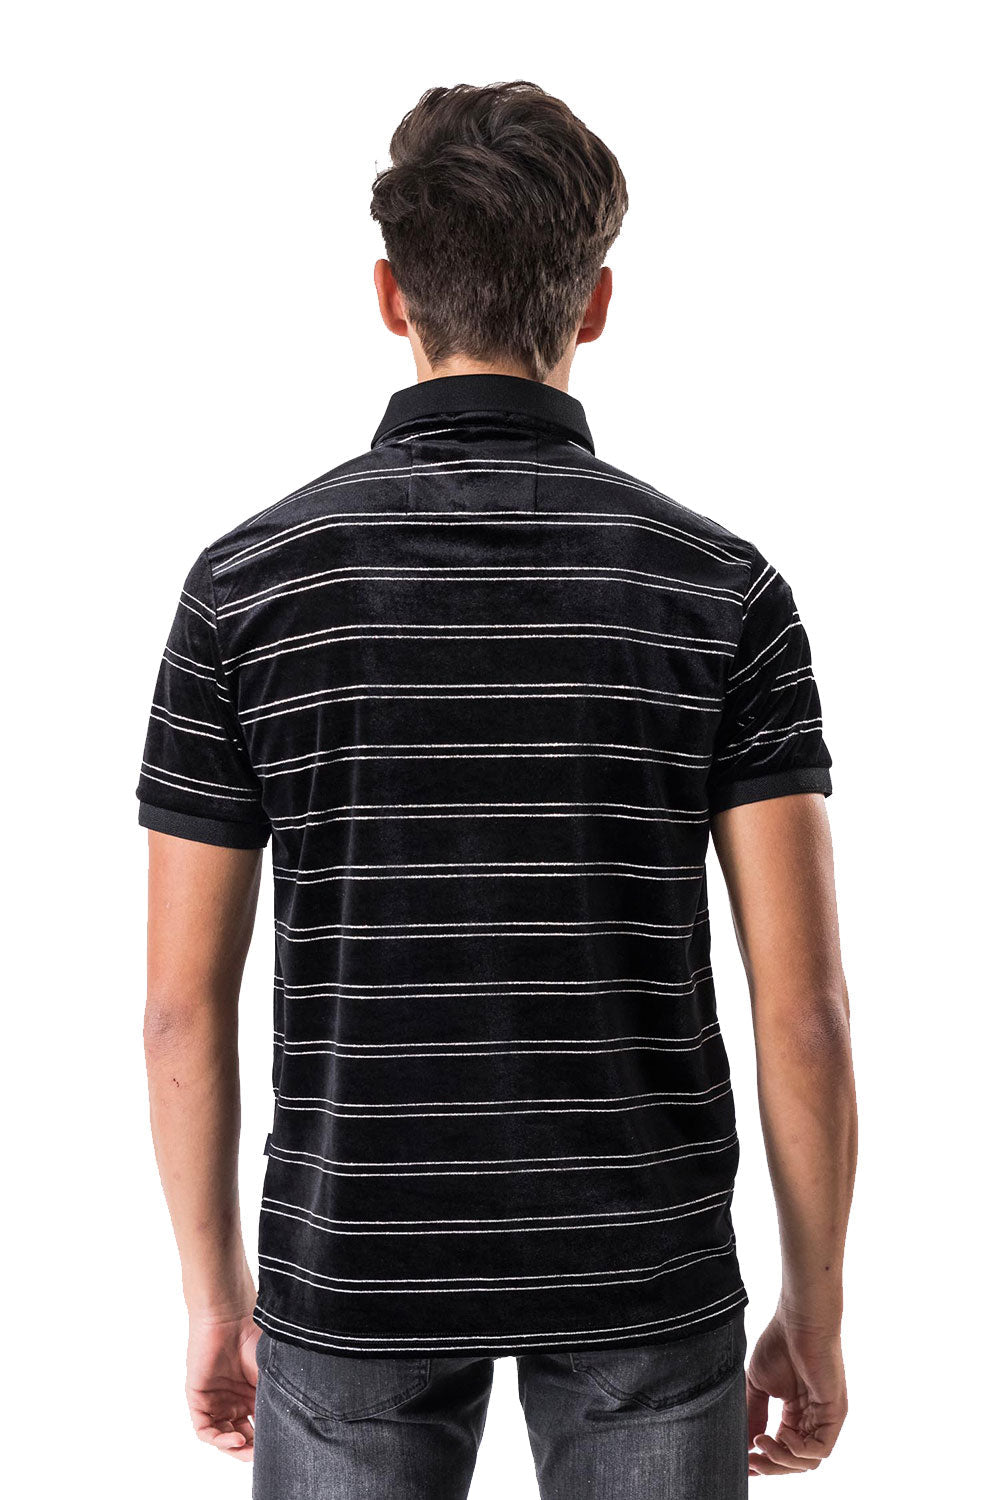 BARABAS Men's Black Silver Glittery Striped Polo Shirts PV50